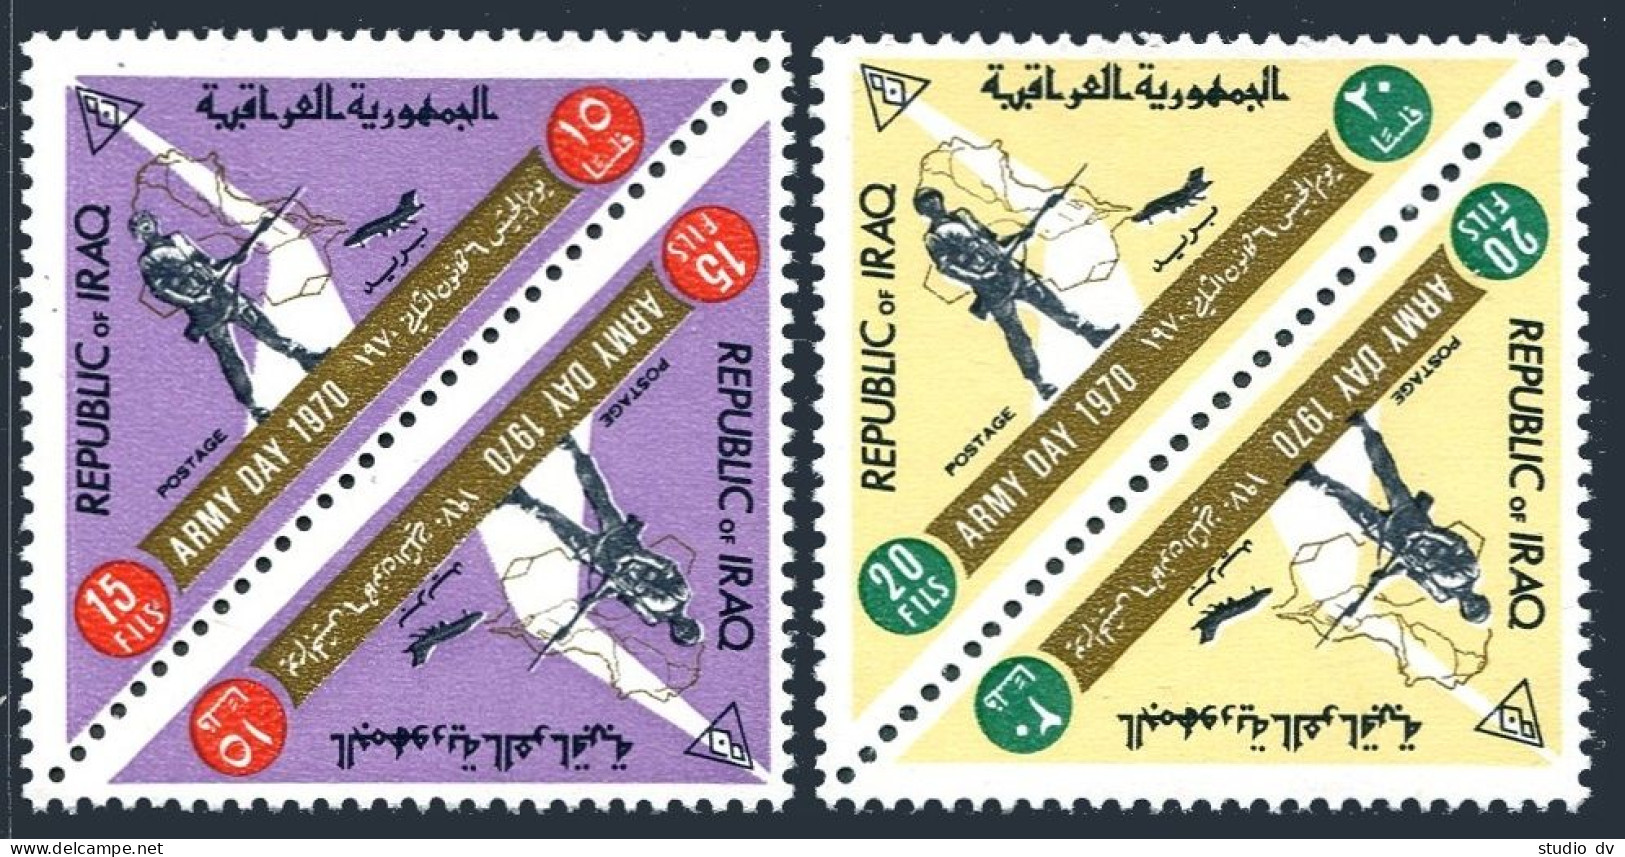 Iraq 522-523 Tete-beche, MNH. Michel 585-586. Army Day 1970. Soldier, Map,Plane. - Iraq